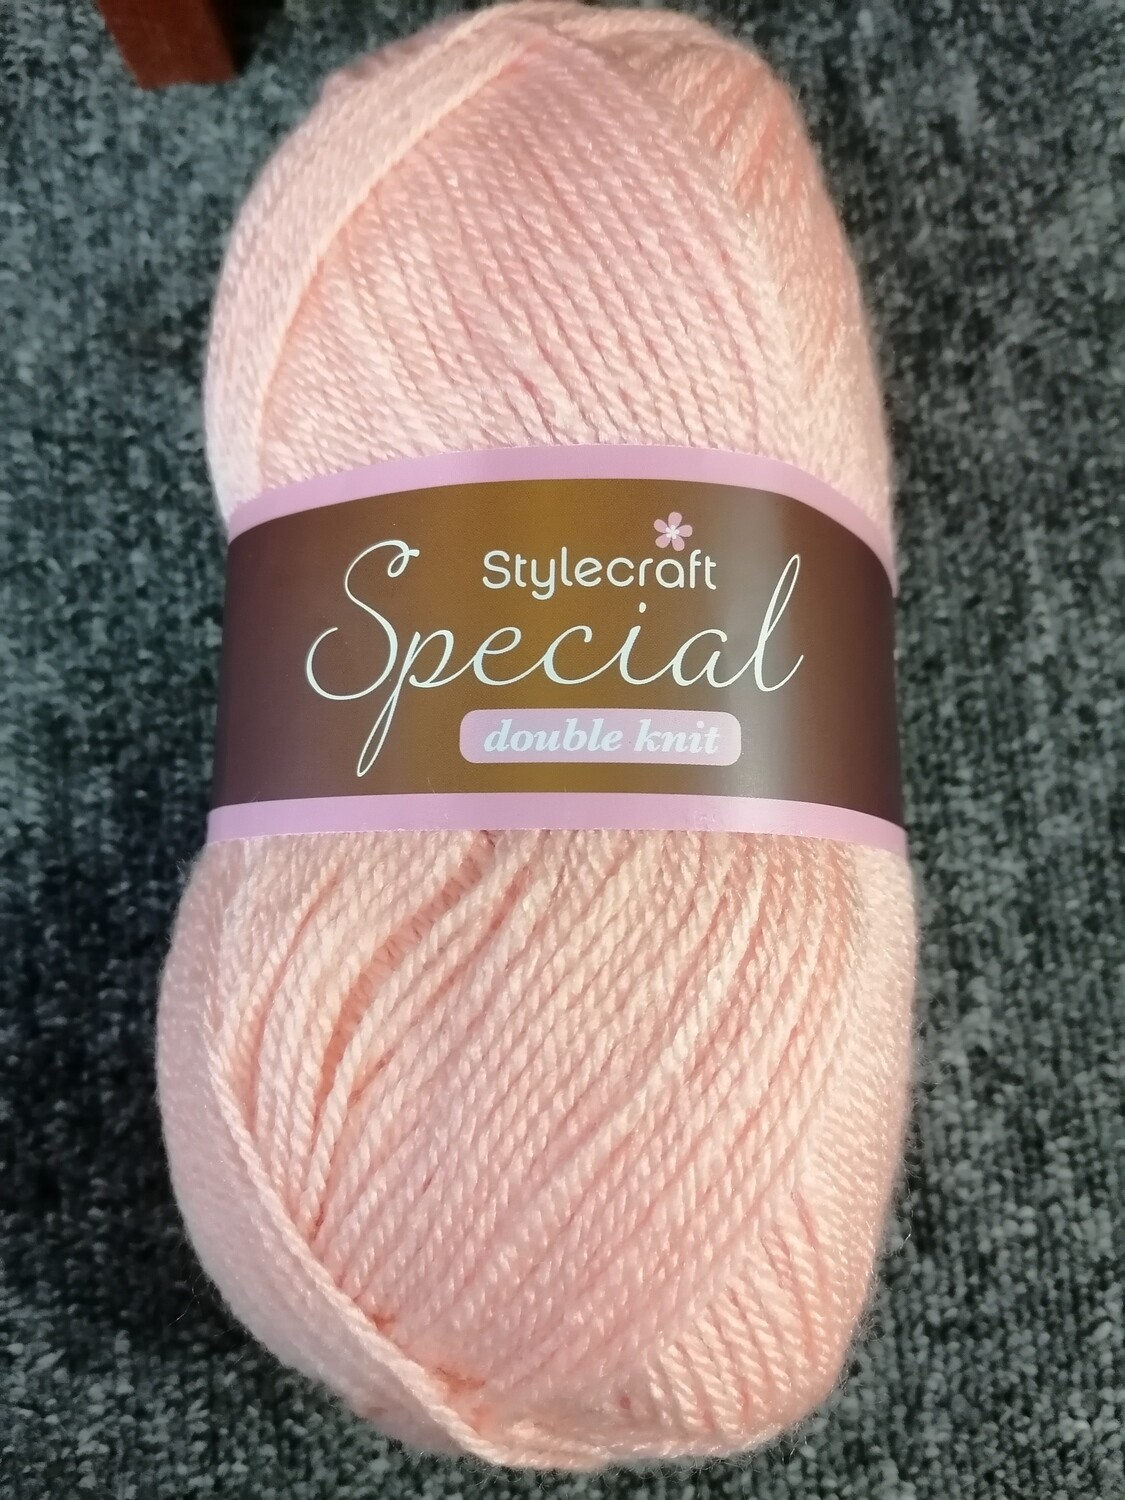 Stylecraft Special Dk - Apricot